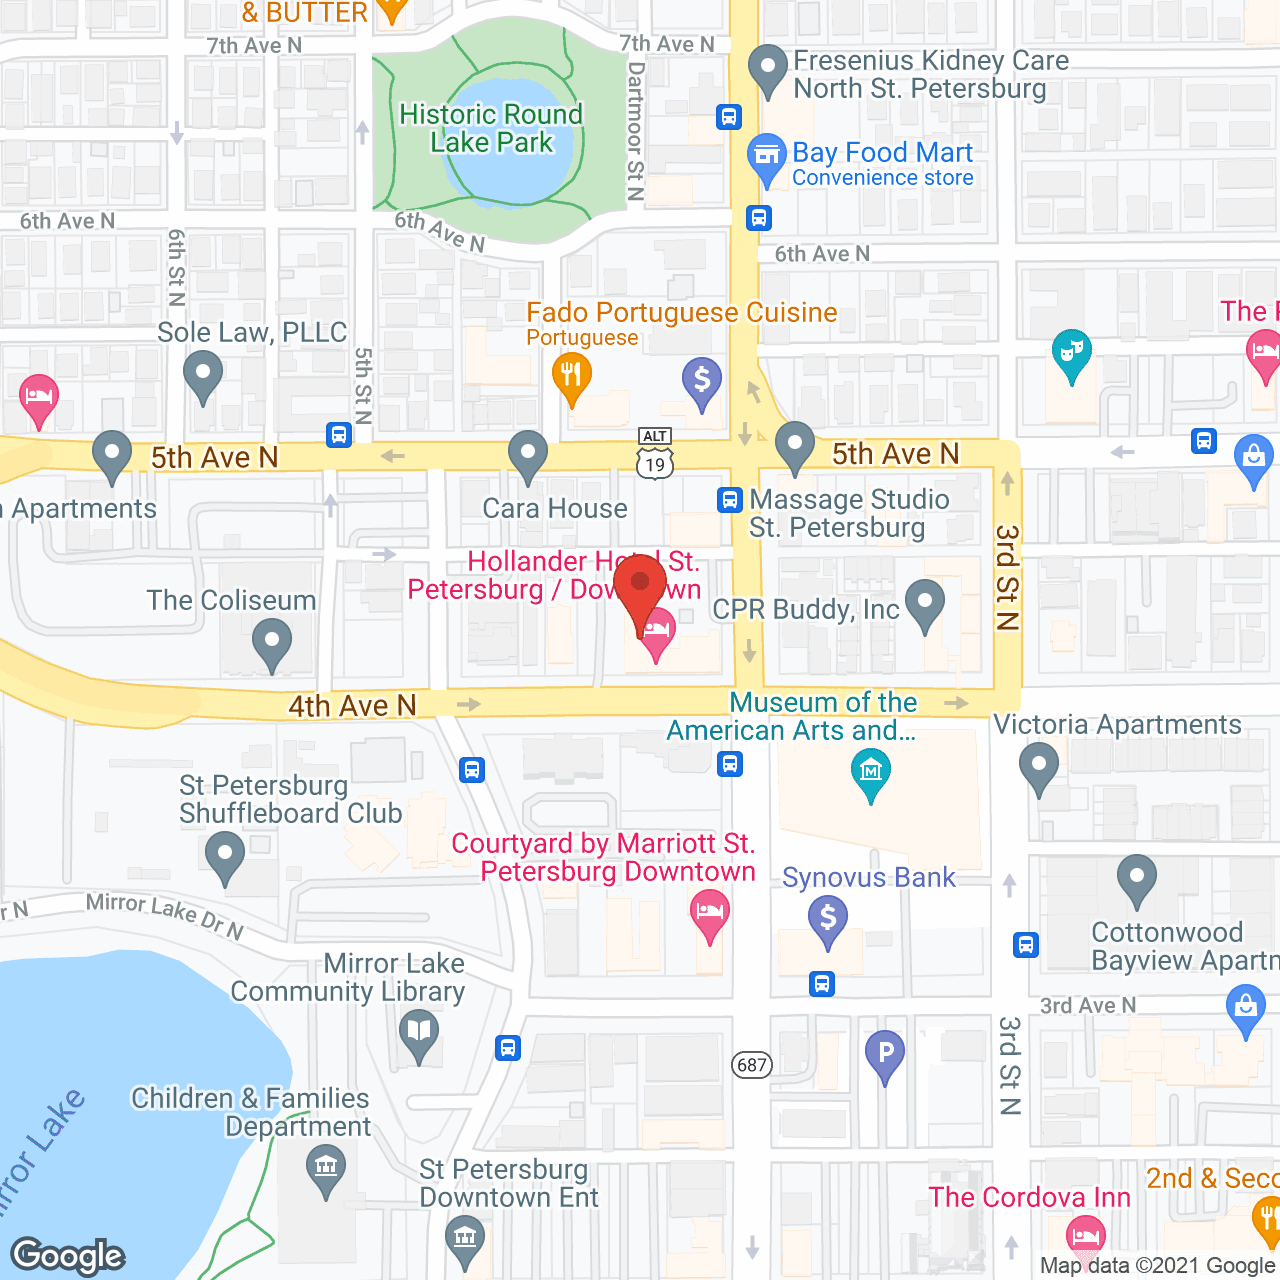 Bond Hotel in google map